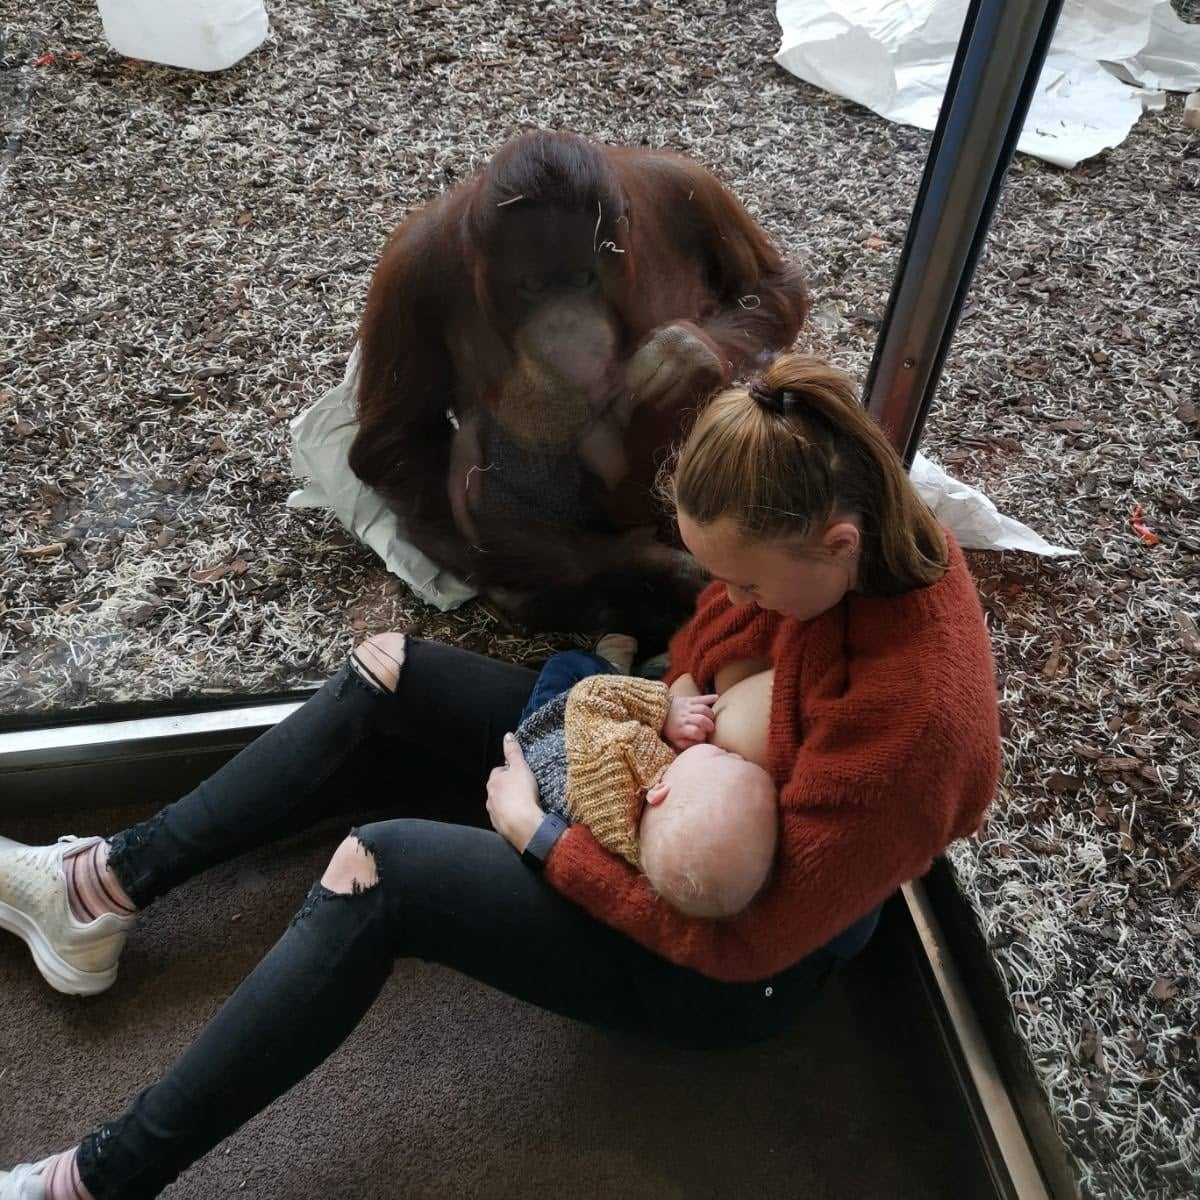 Orangutan Watches Mom Breastfeeding Her Baby | Video | POPSUGAR Family